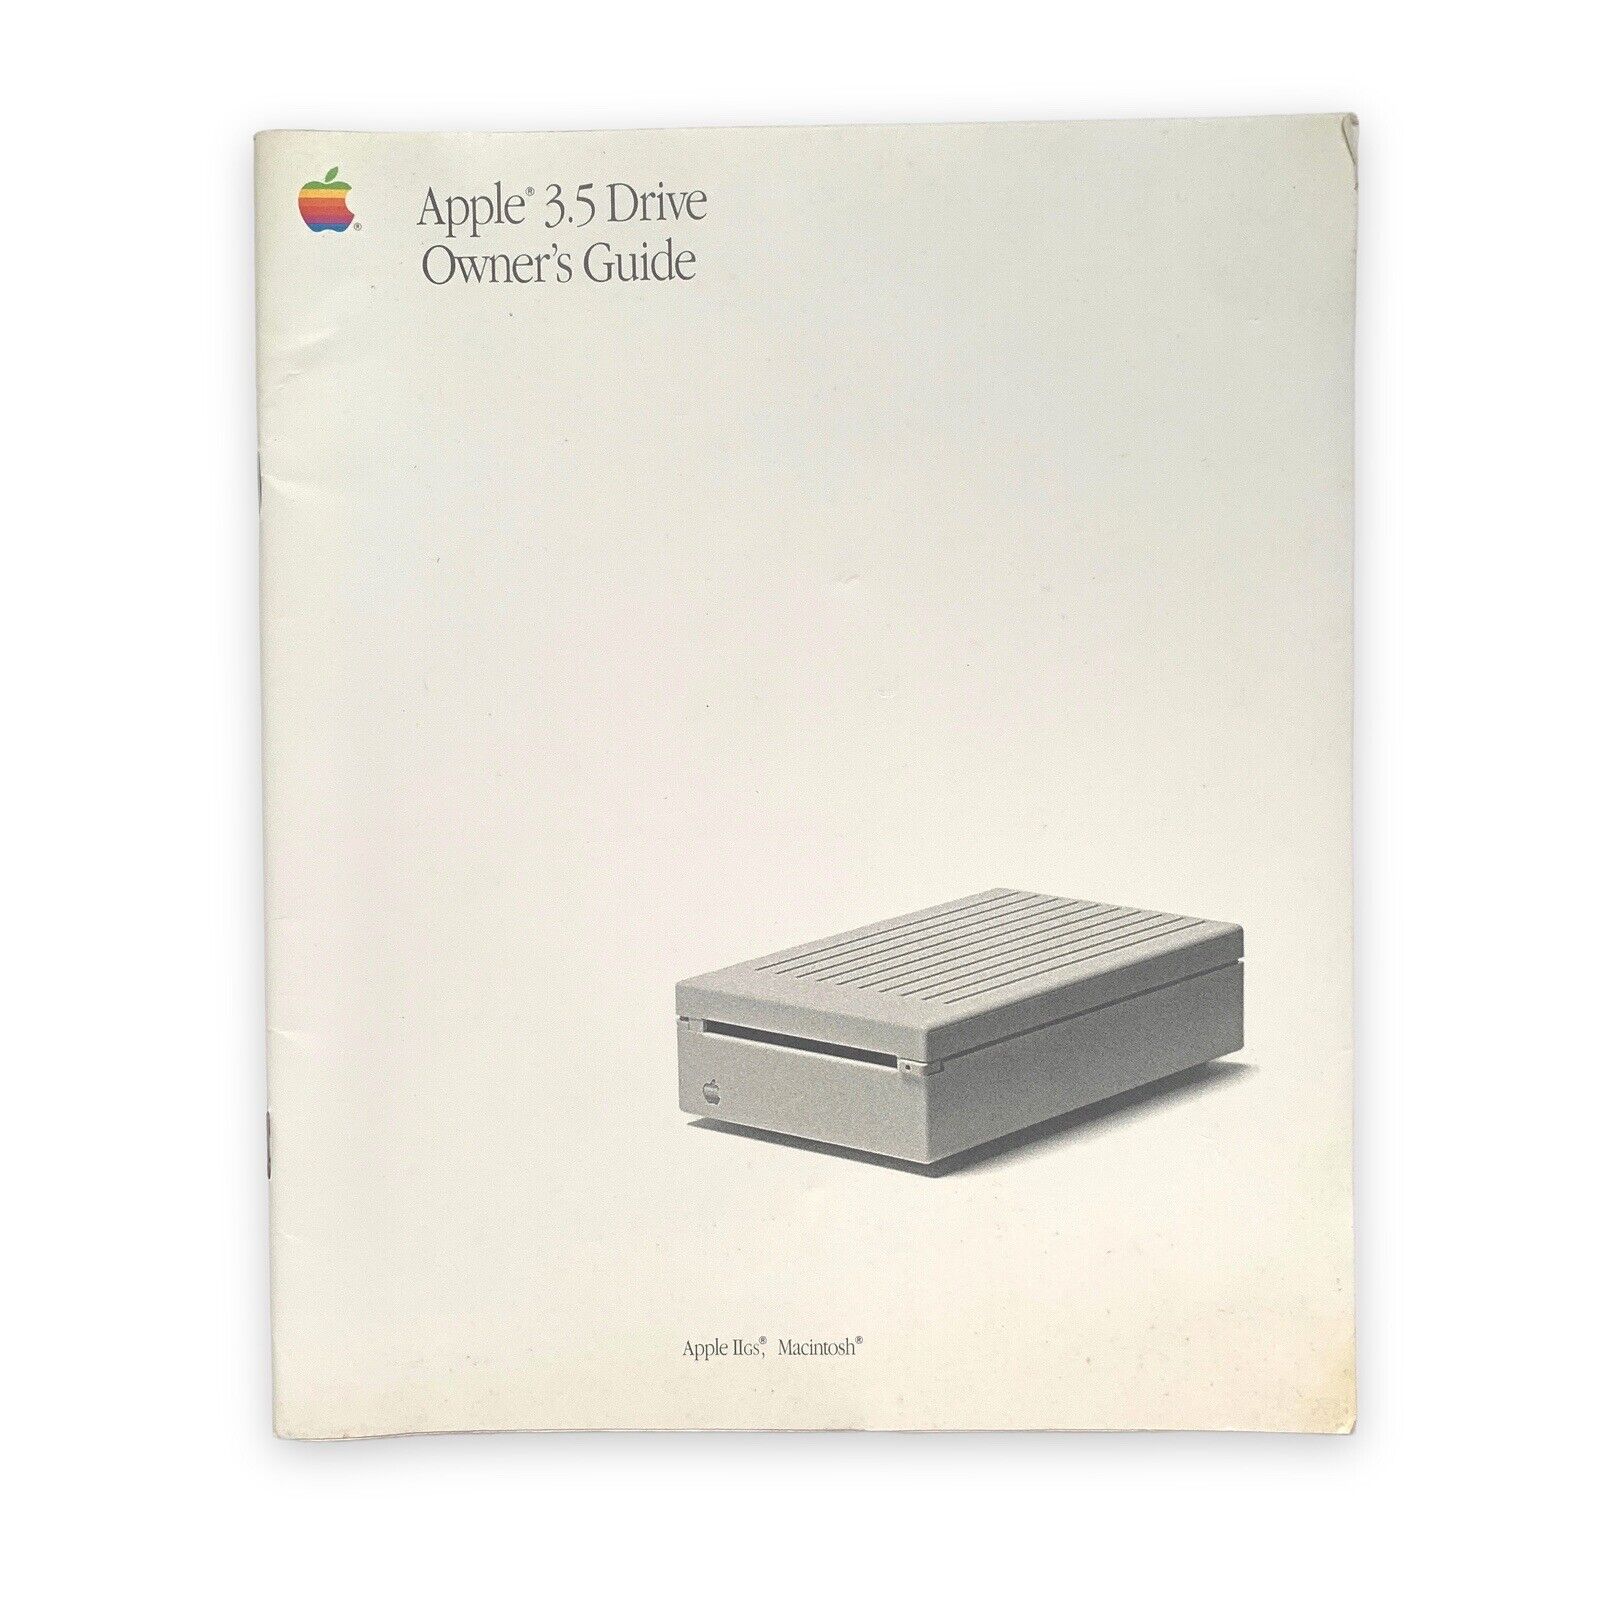 Apple 3.5 Drive Owner’s Guide Manual VTG 1986 